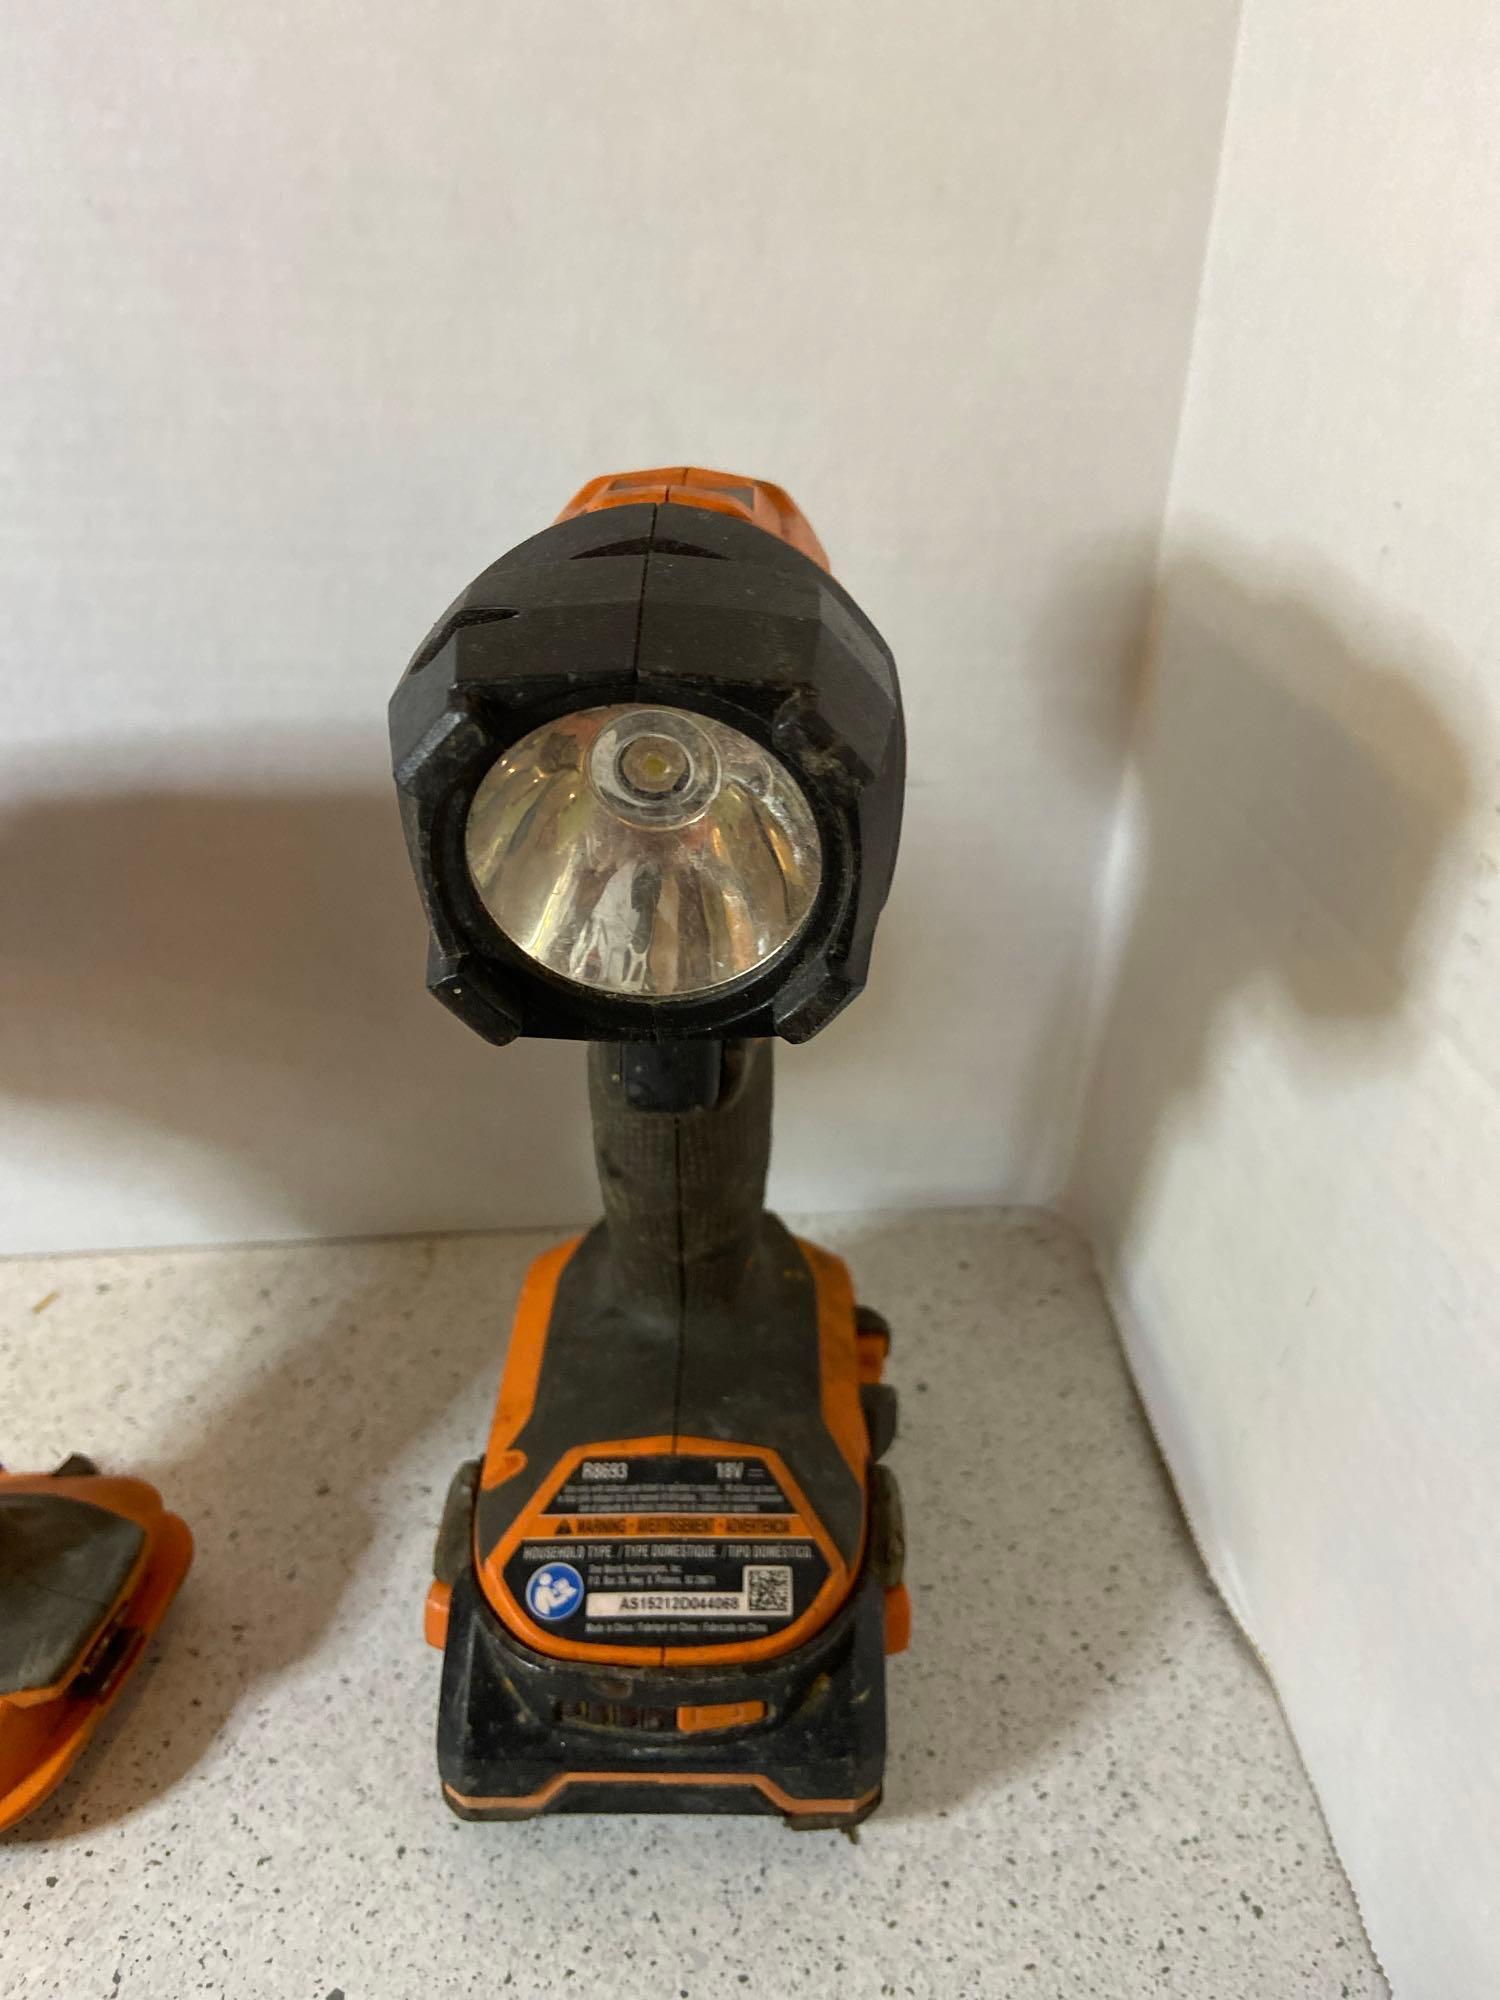 Rigid AM/FM radio drills flashlight angle grinder